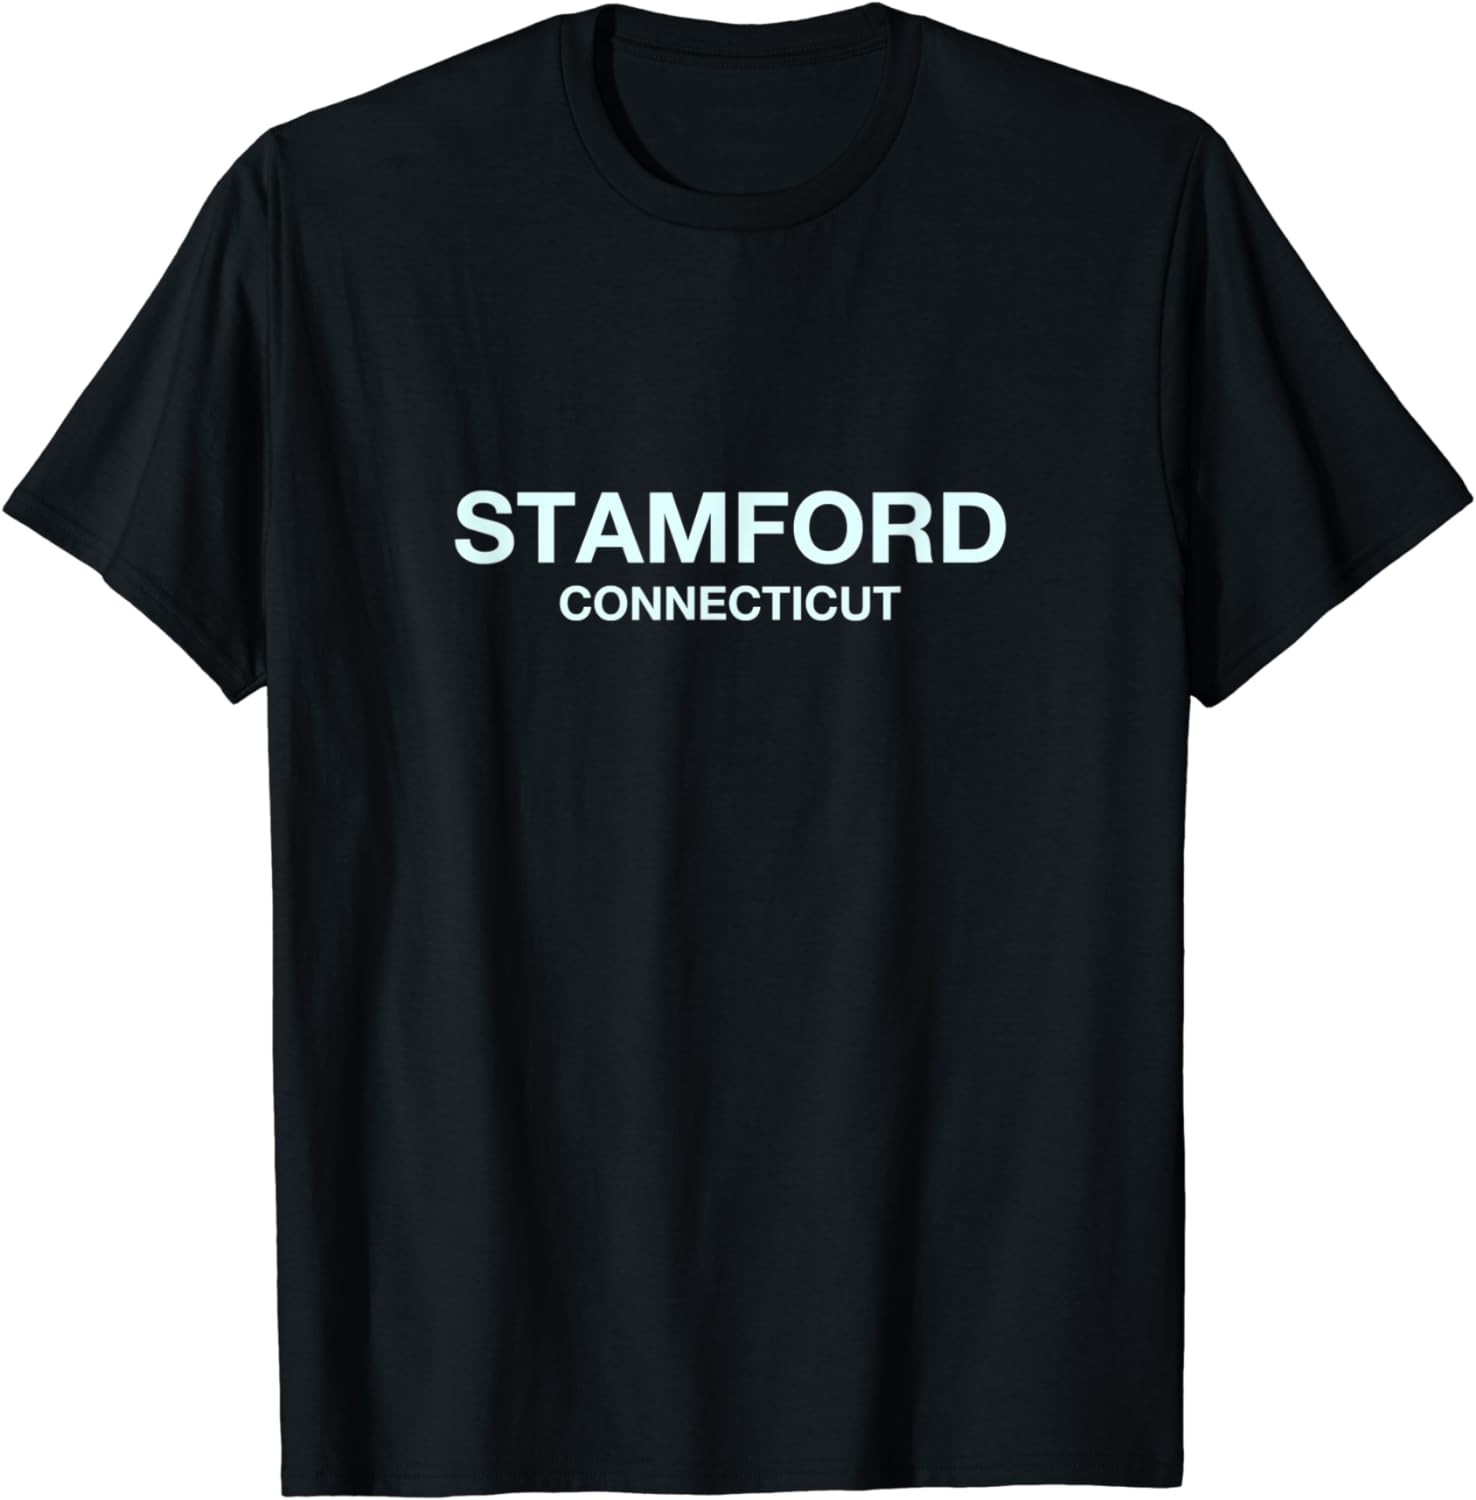 Stamford Connecticut - College, University, School Stamford T-Shirt